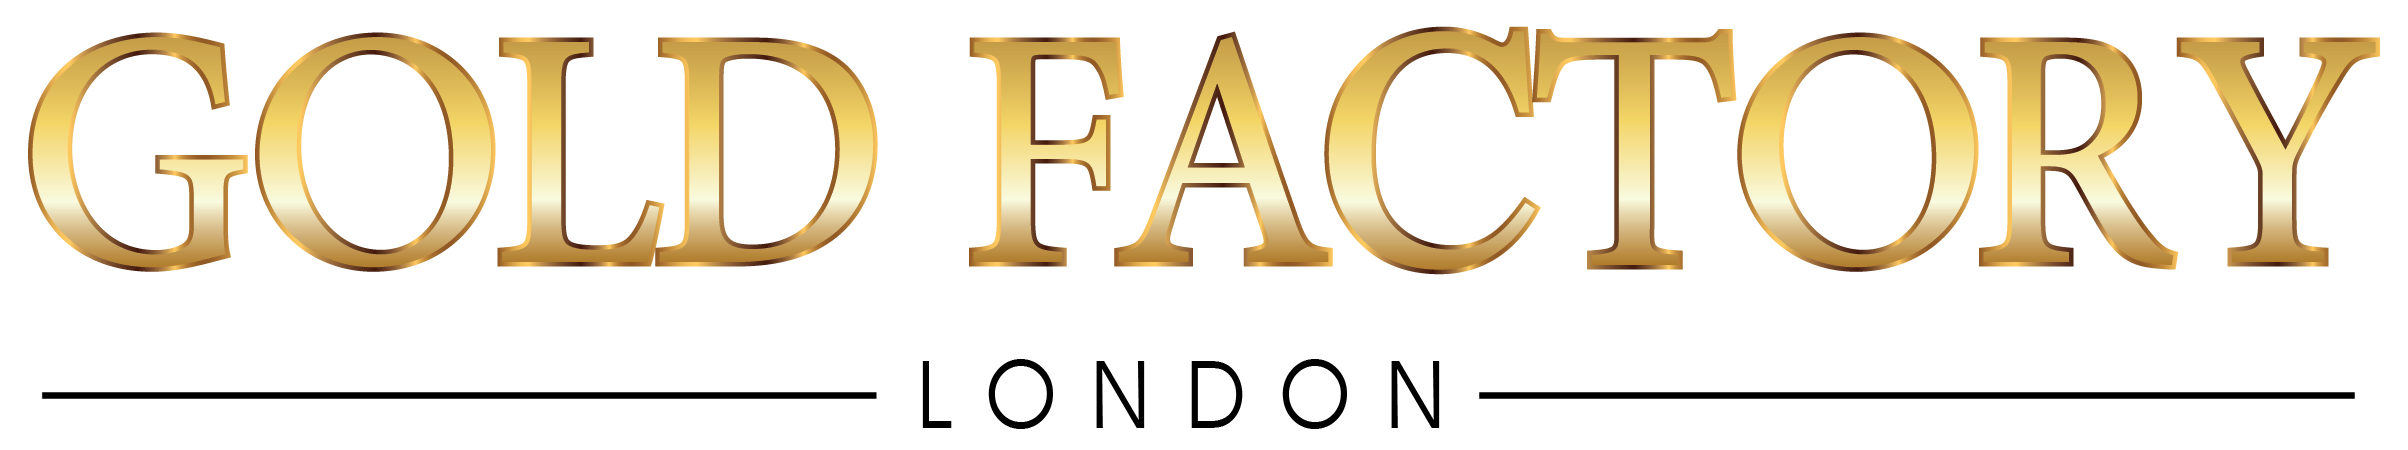 gold factory logo London